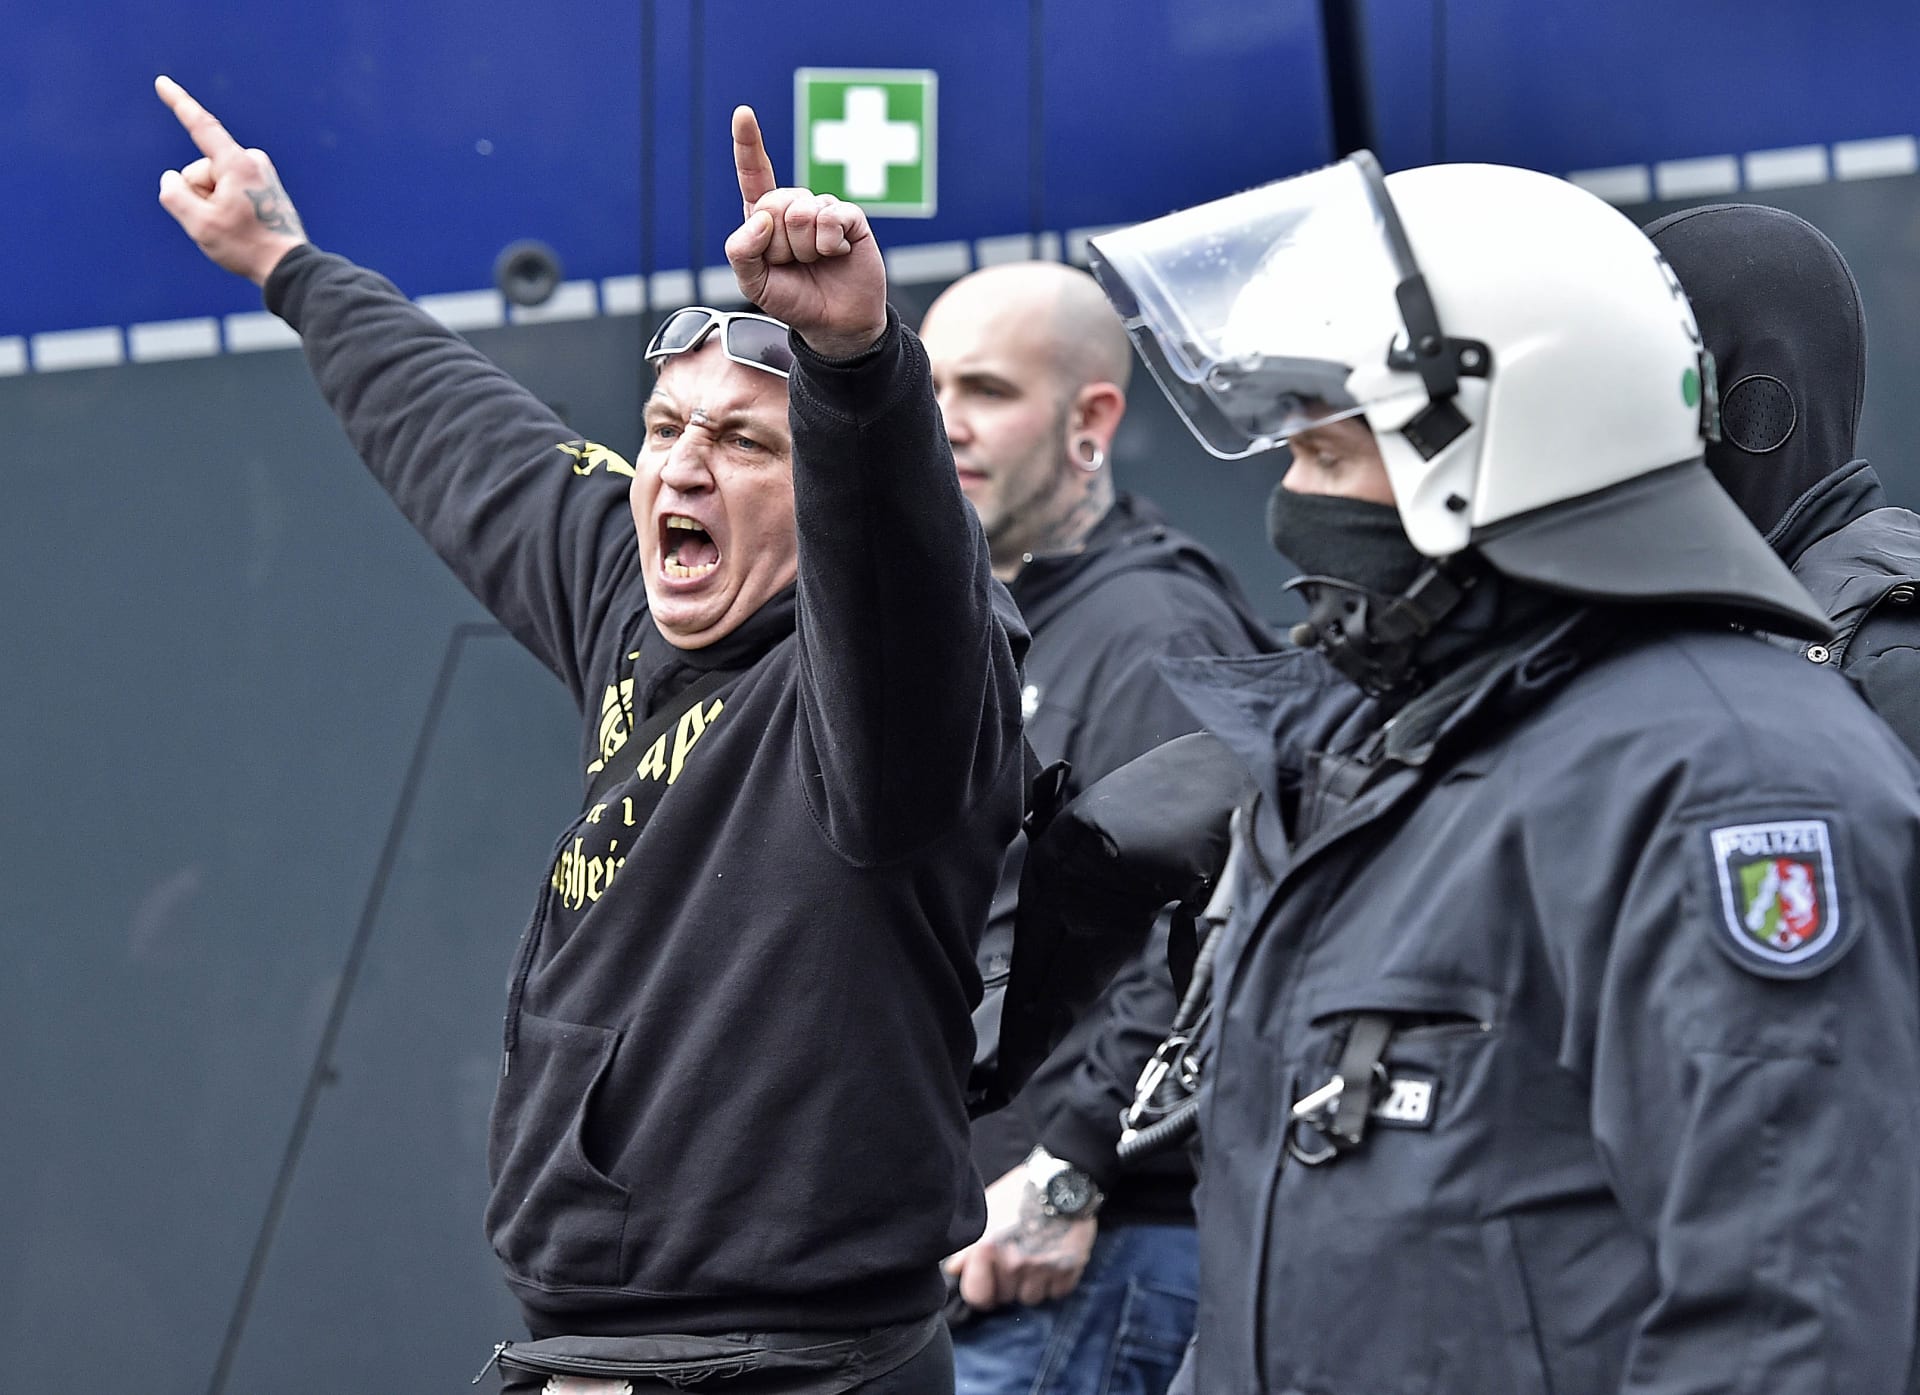 Policie odvádí demonstranta na krajně pravicové akci svolané fotbalovými chuligány.